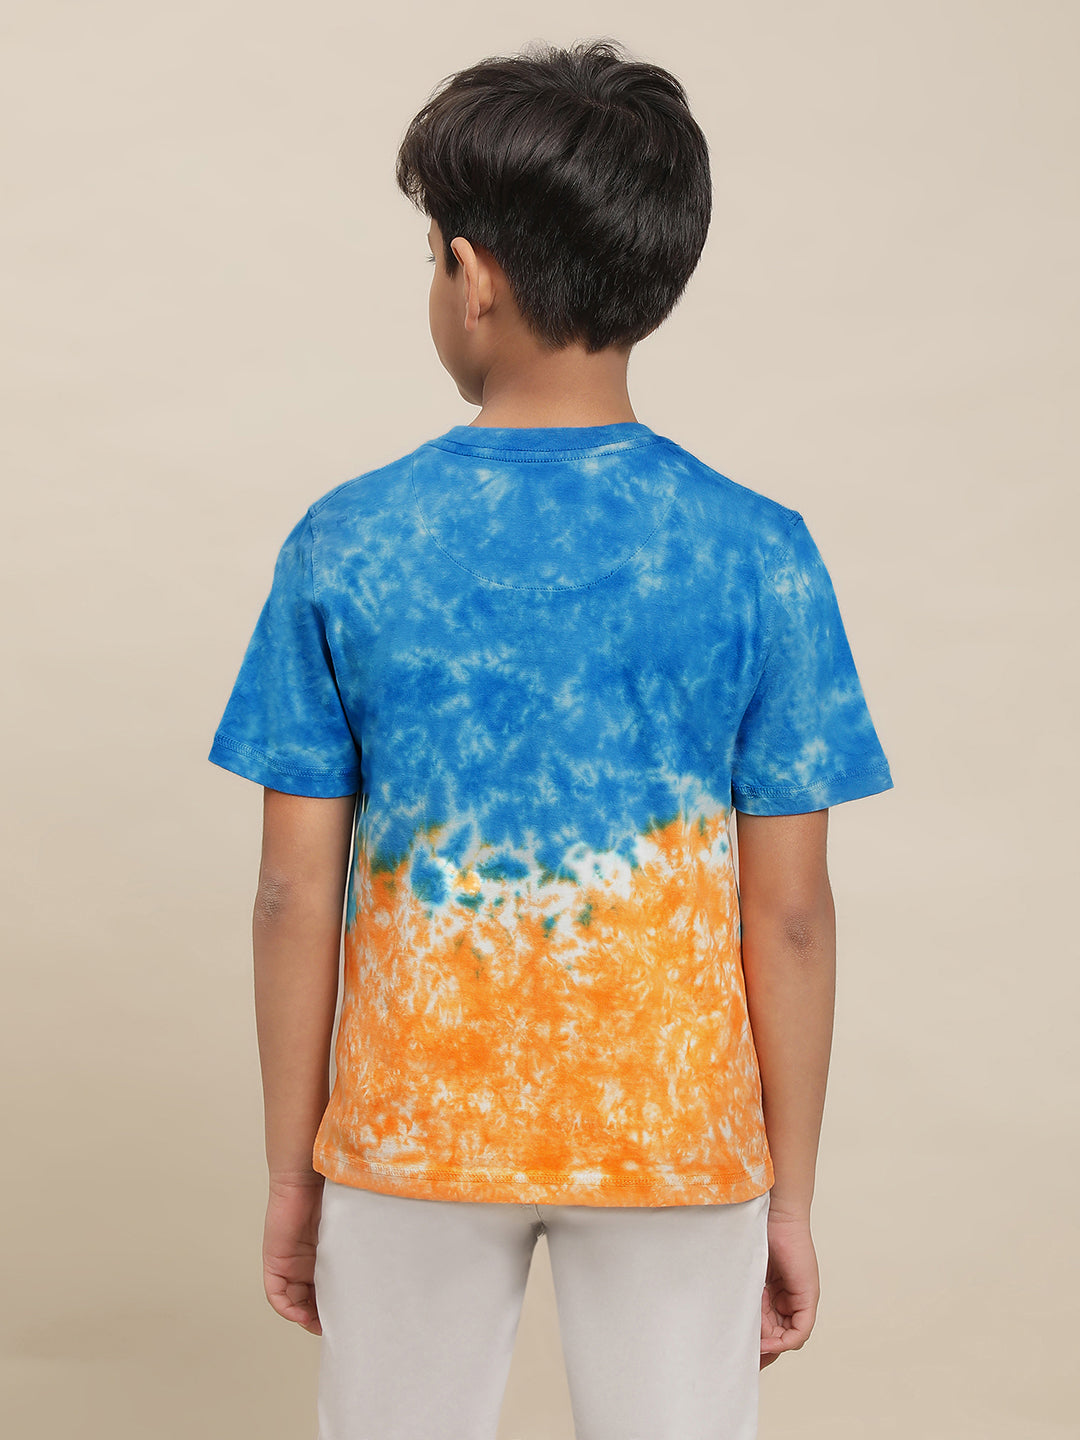 Kidsville Naruto Printed Multi Color Tshirt For Boys